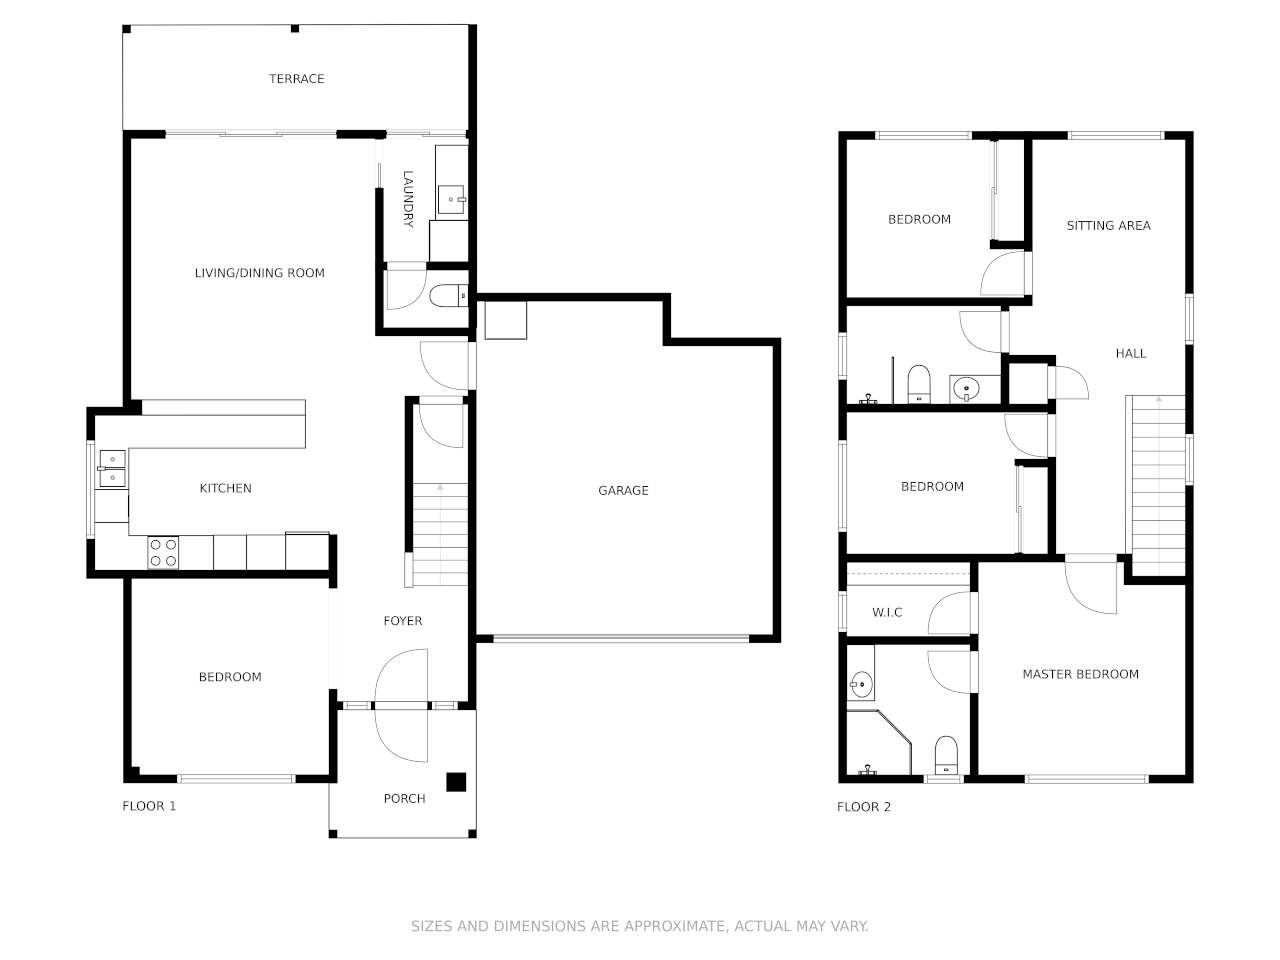 Floor Plan with a garage